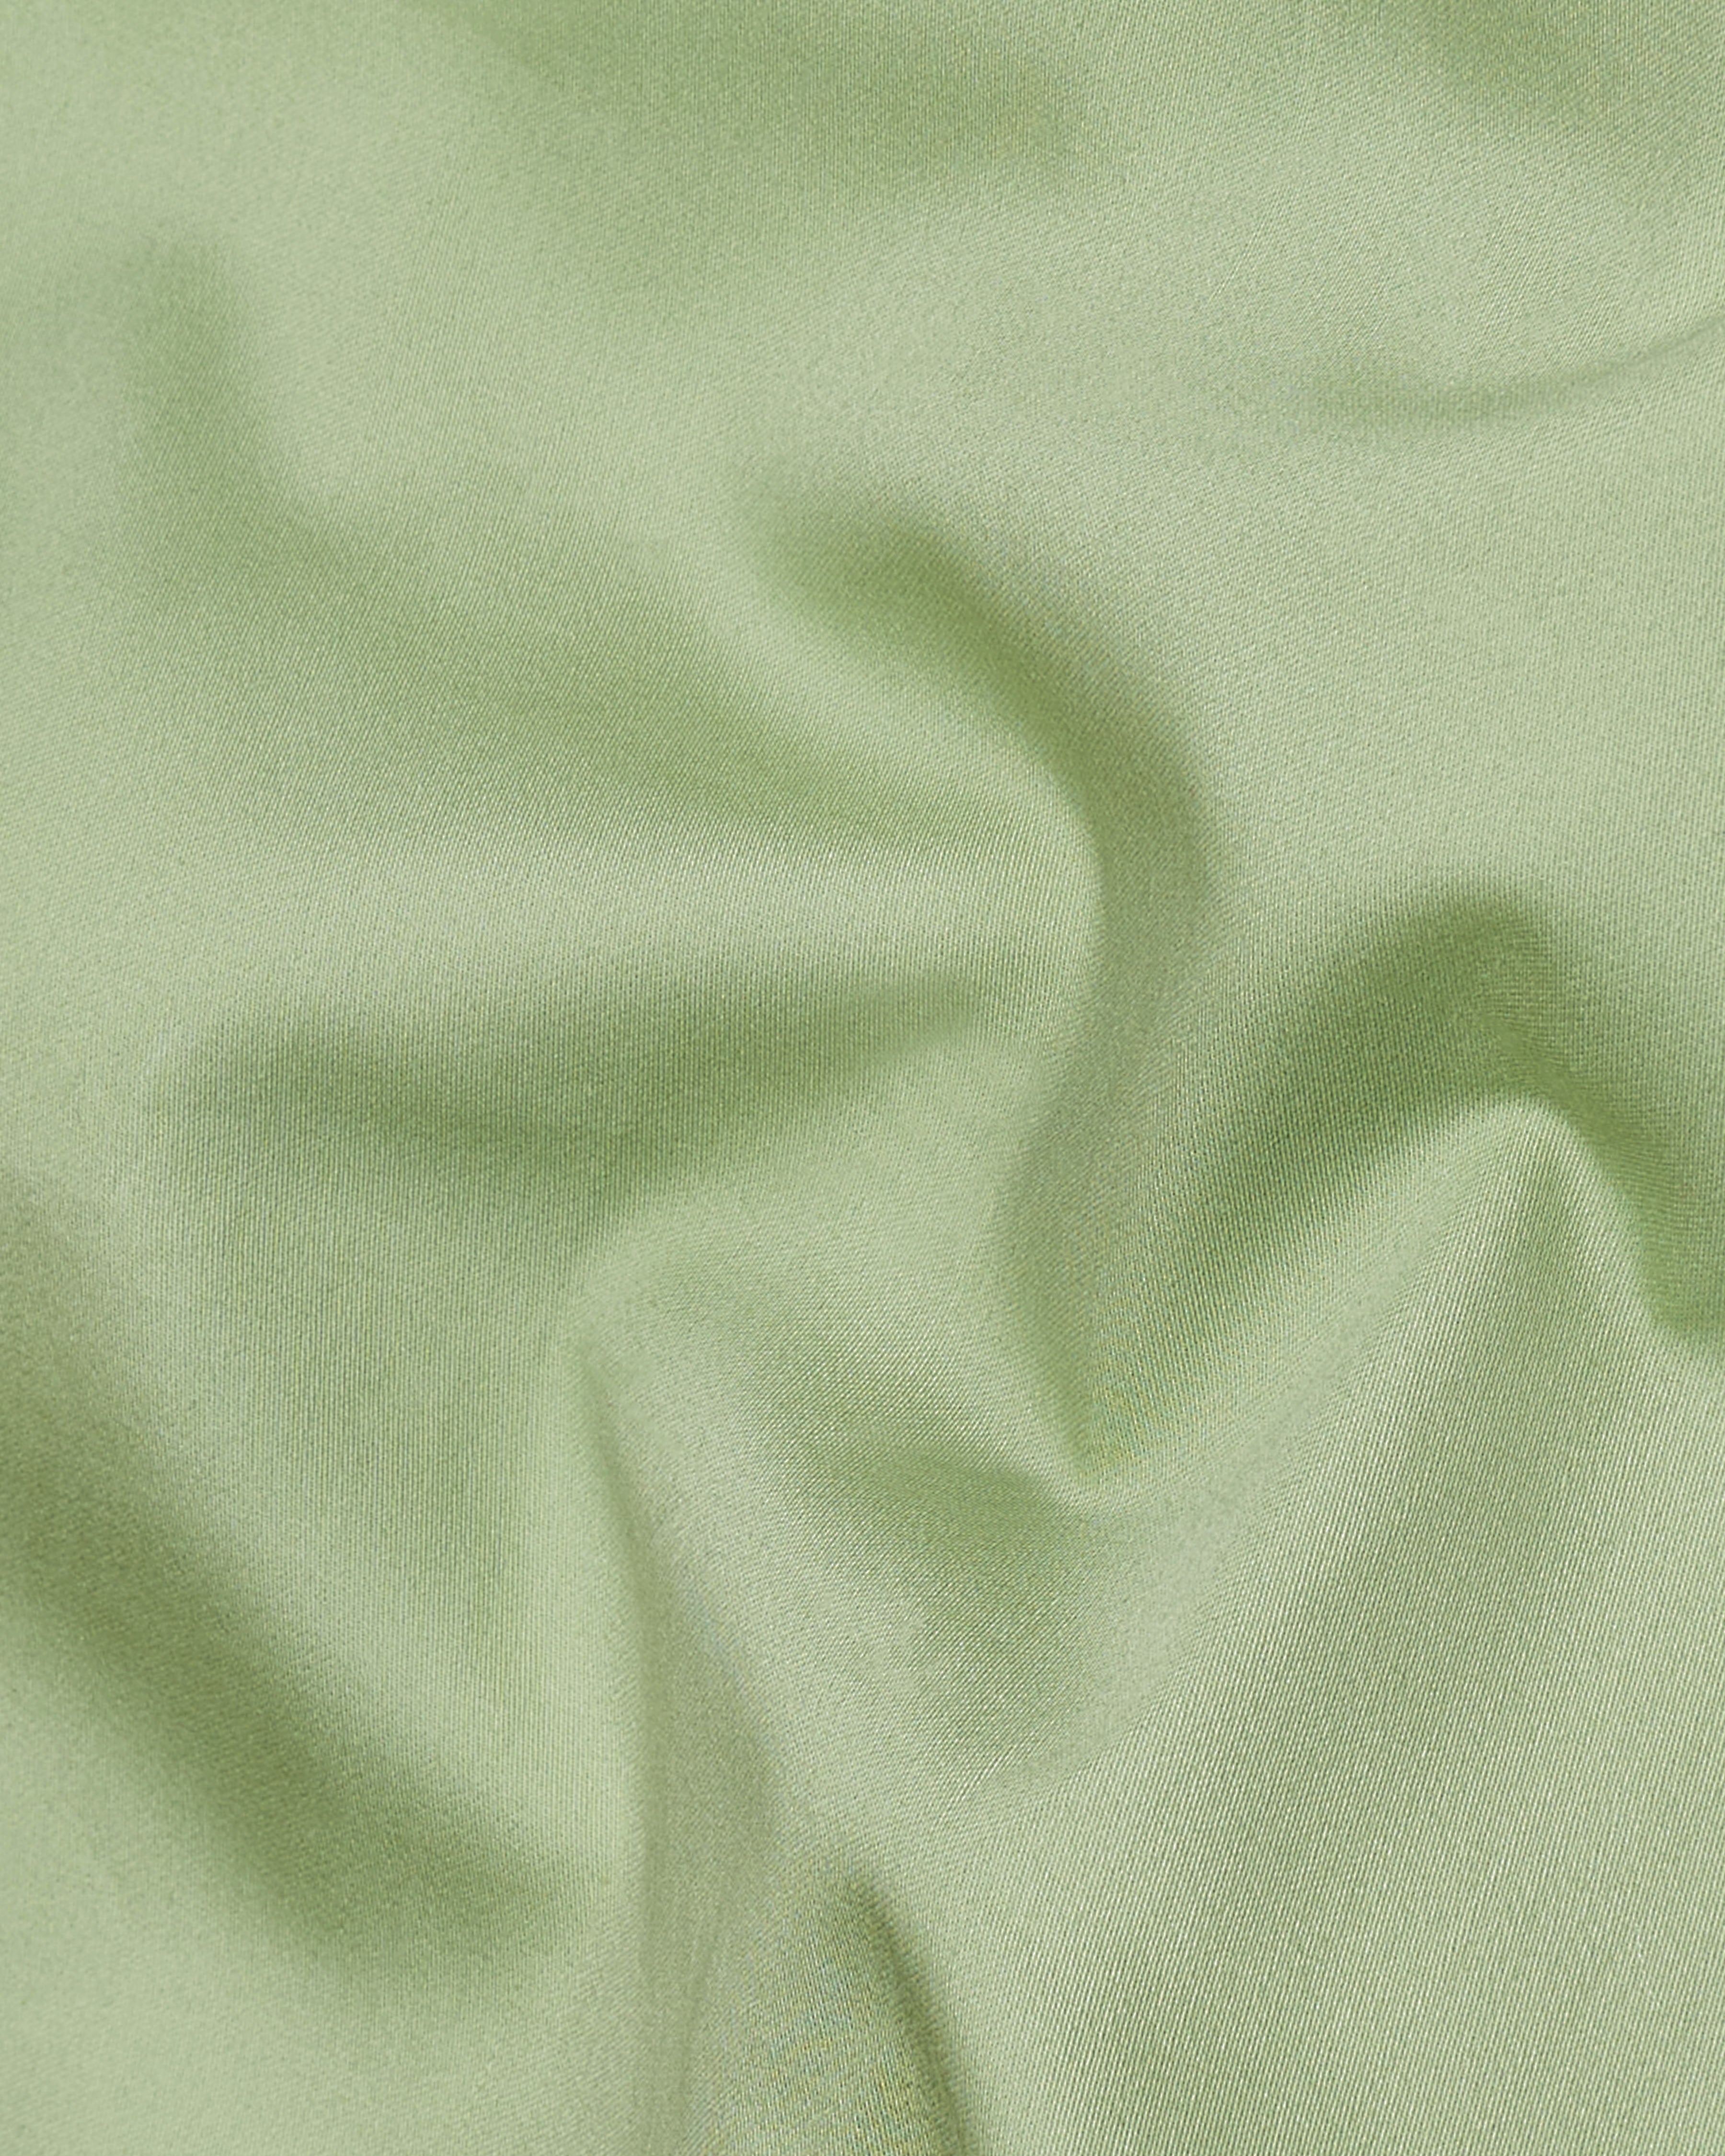 Swamp Green Subtle Sheen Super Soft Premium Cotton Shirt 8887-BLK-38, 8887-BLK-H-38, 8887-BLK-39, 8887-BLK-H-39, 8887-BLK-40, 8887-BLK-H-40, 8887-BLK-42, 8887-BLK-H-42, 8887-BLK-44, 8887-BLK-H-44, 8887-BLK-46, 8887-BLK-H-46, 8887-BLK-48, 8887-BLK-H-48, 8887-BLK-50, 8887-BLK-H-50, 8887-BLK-52, 8887-BLK-H-52